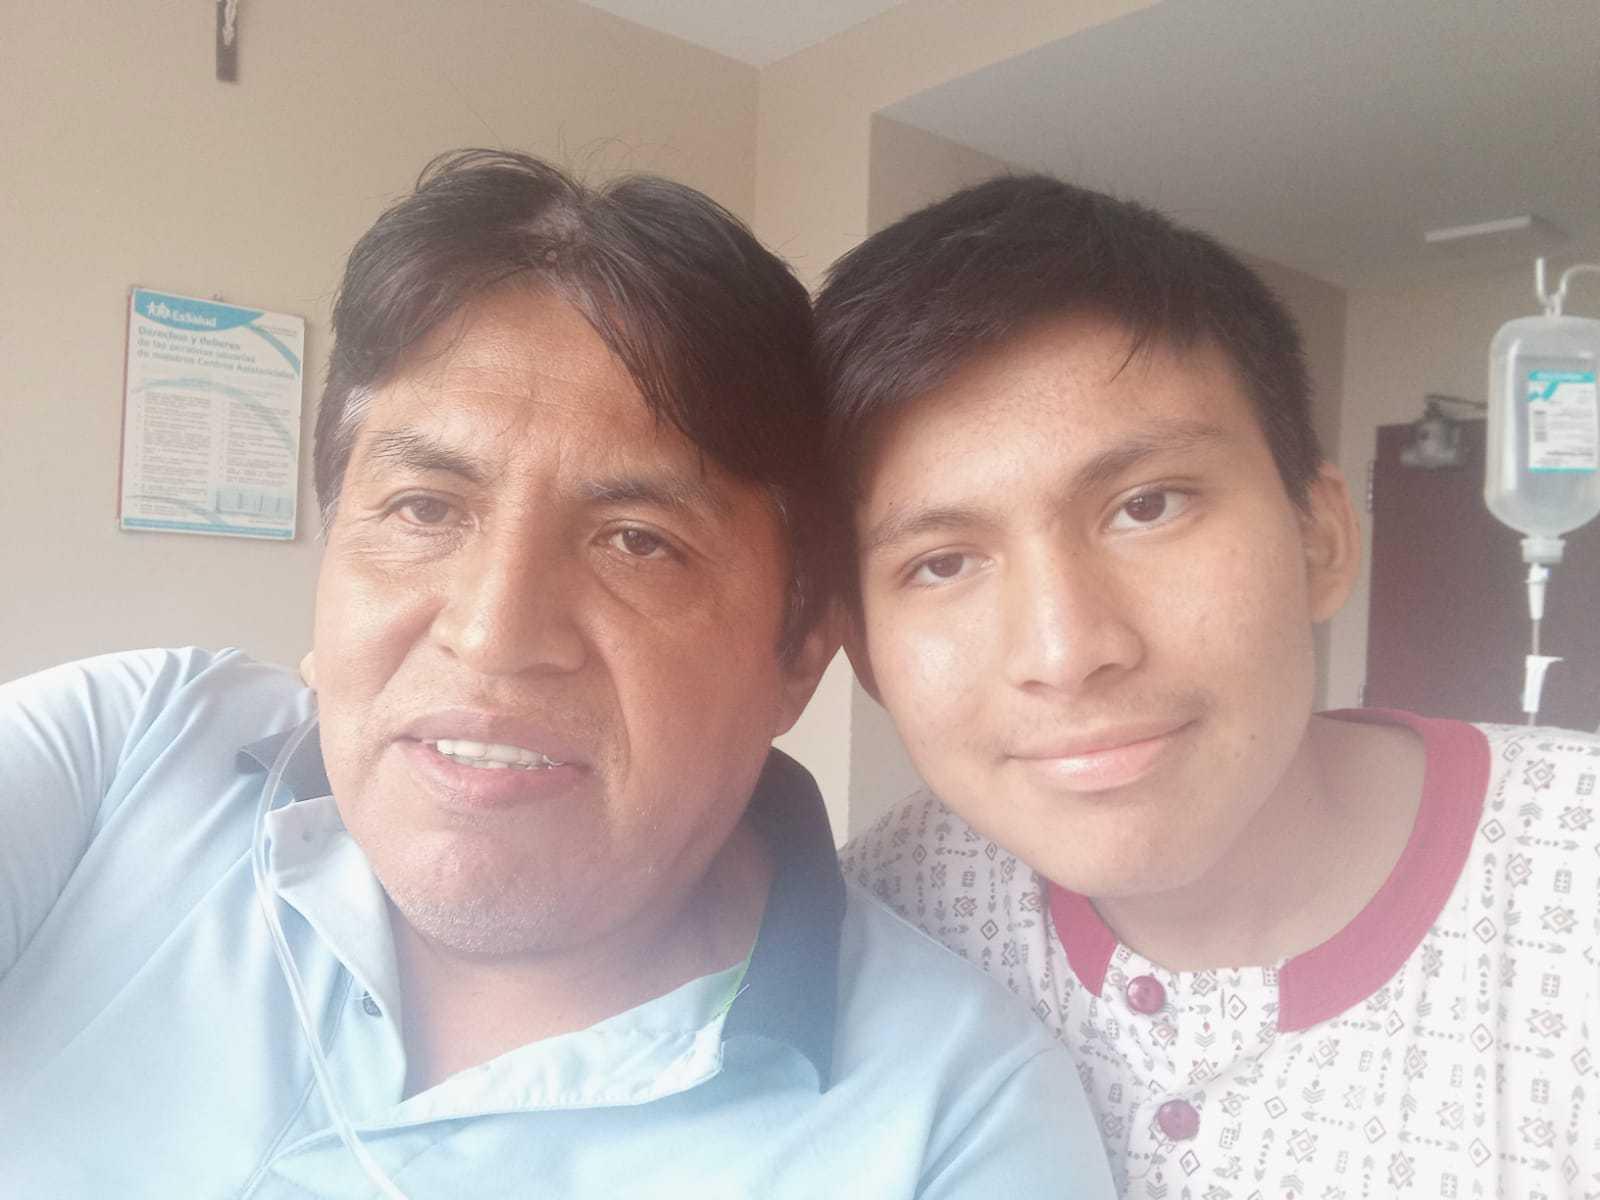 Estefano Carrión and his father, Johny, on a recent morning at the hospital Edgardo Rebagliati in Lima, Peru.